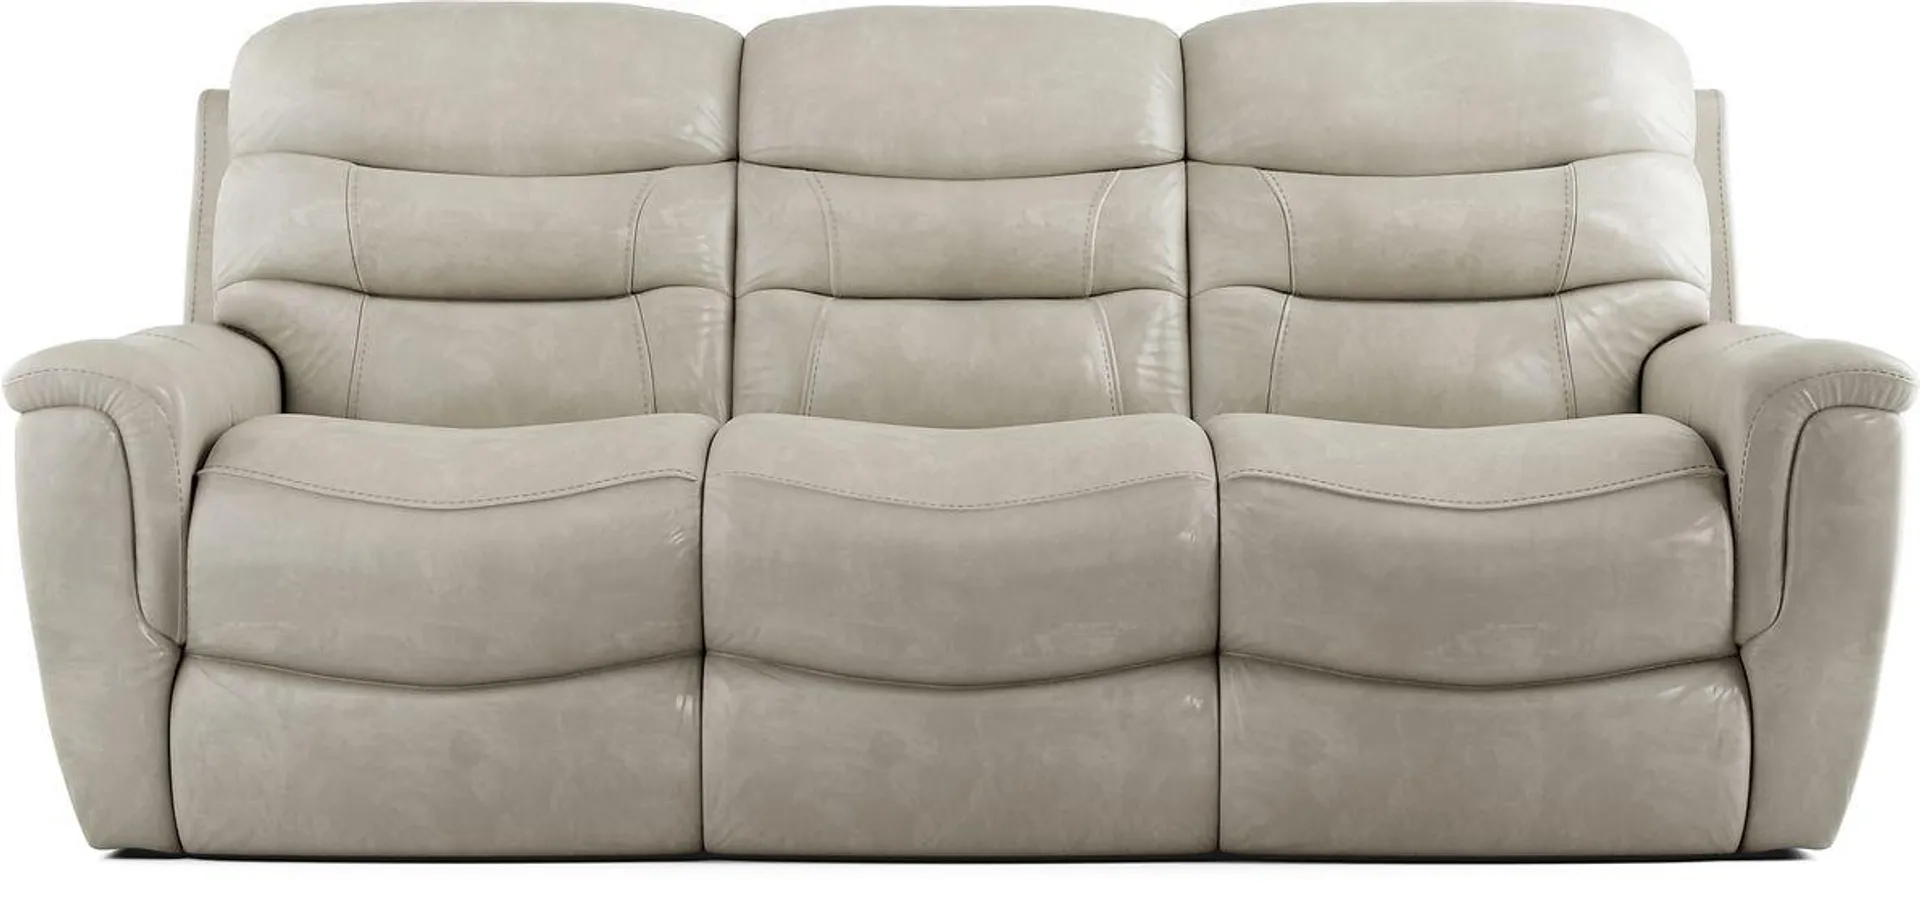 Sabella Leather Power Reclining Sofa